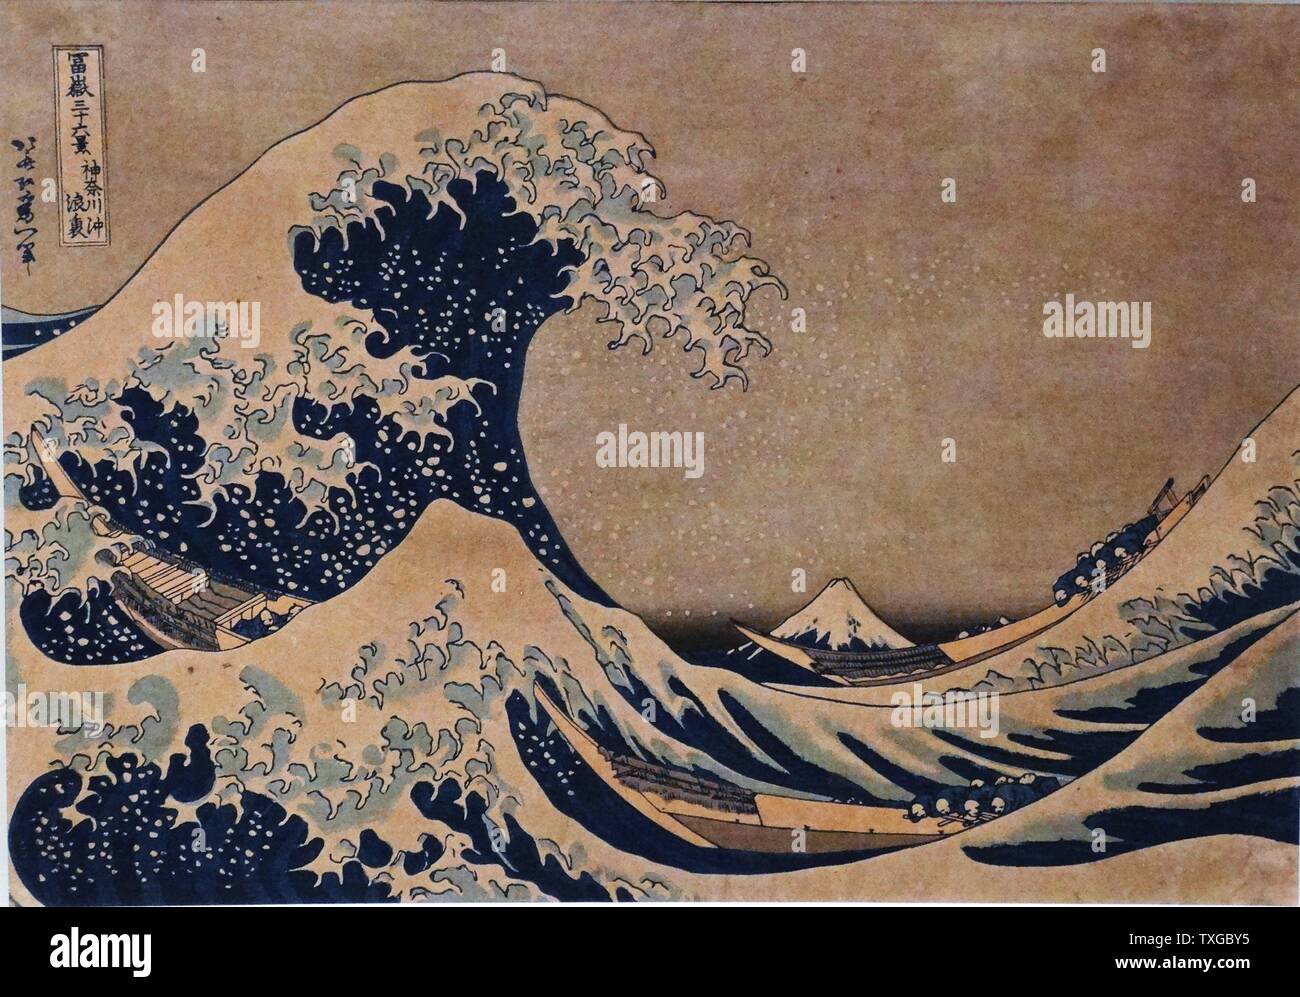 The Great Wave of Kanagawa by Katsushika Hokusai (1760-1849) Japanese artist, ukiyo-e painter and printmaker of the Edo period. Dated 1832 Stock Photo